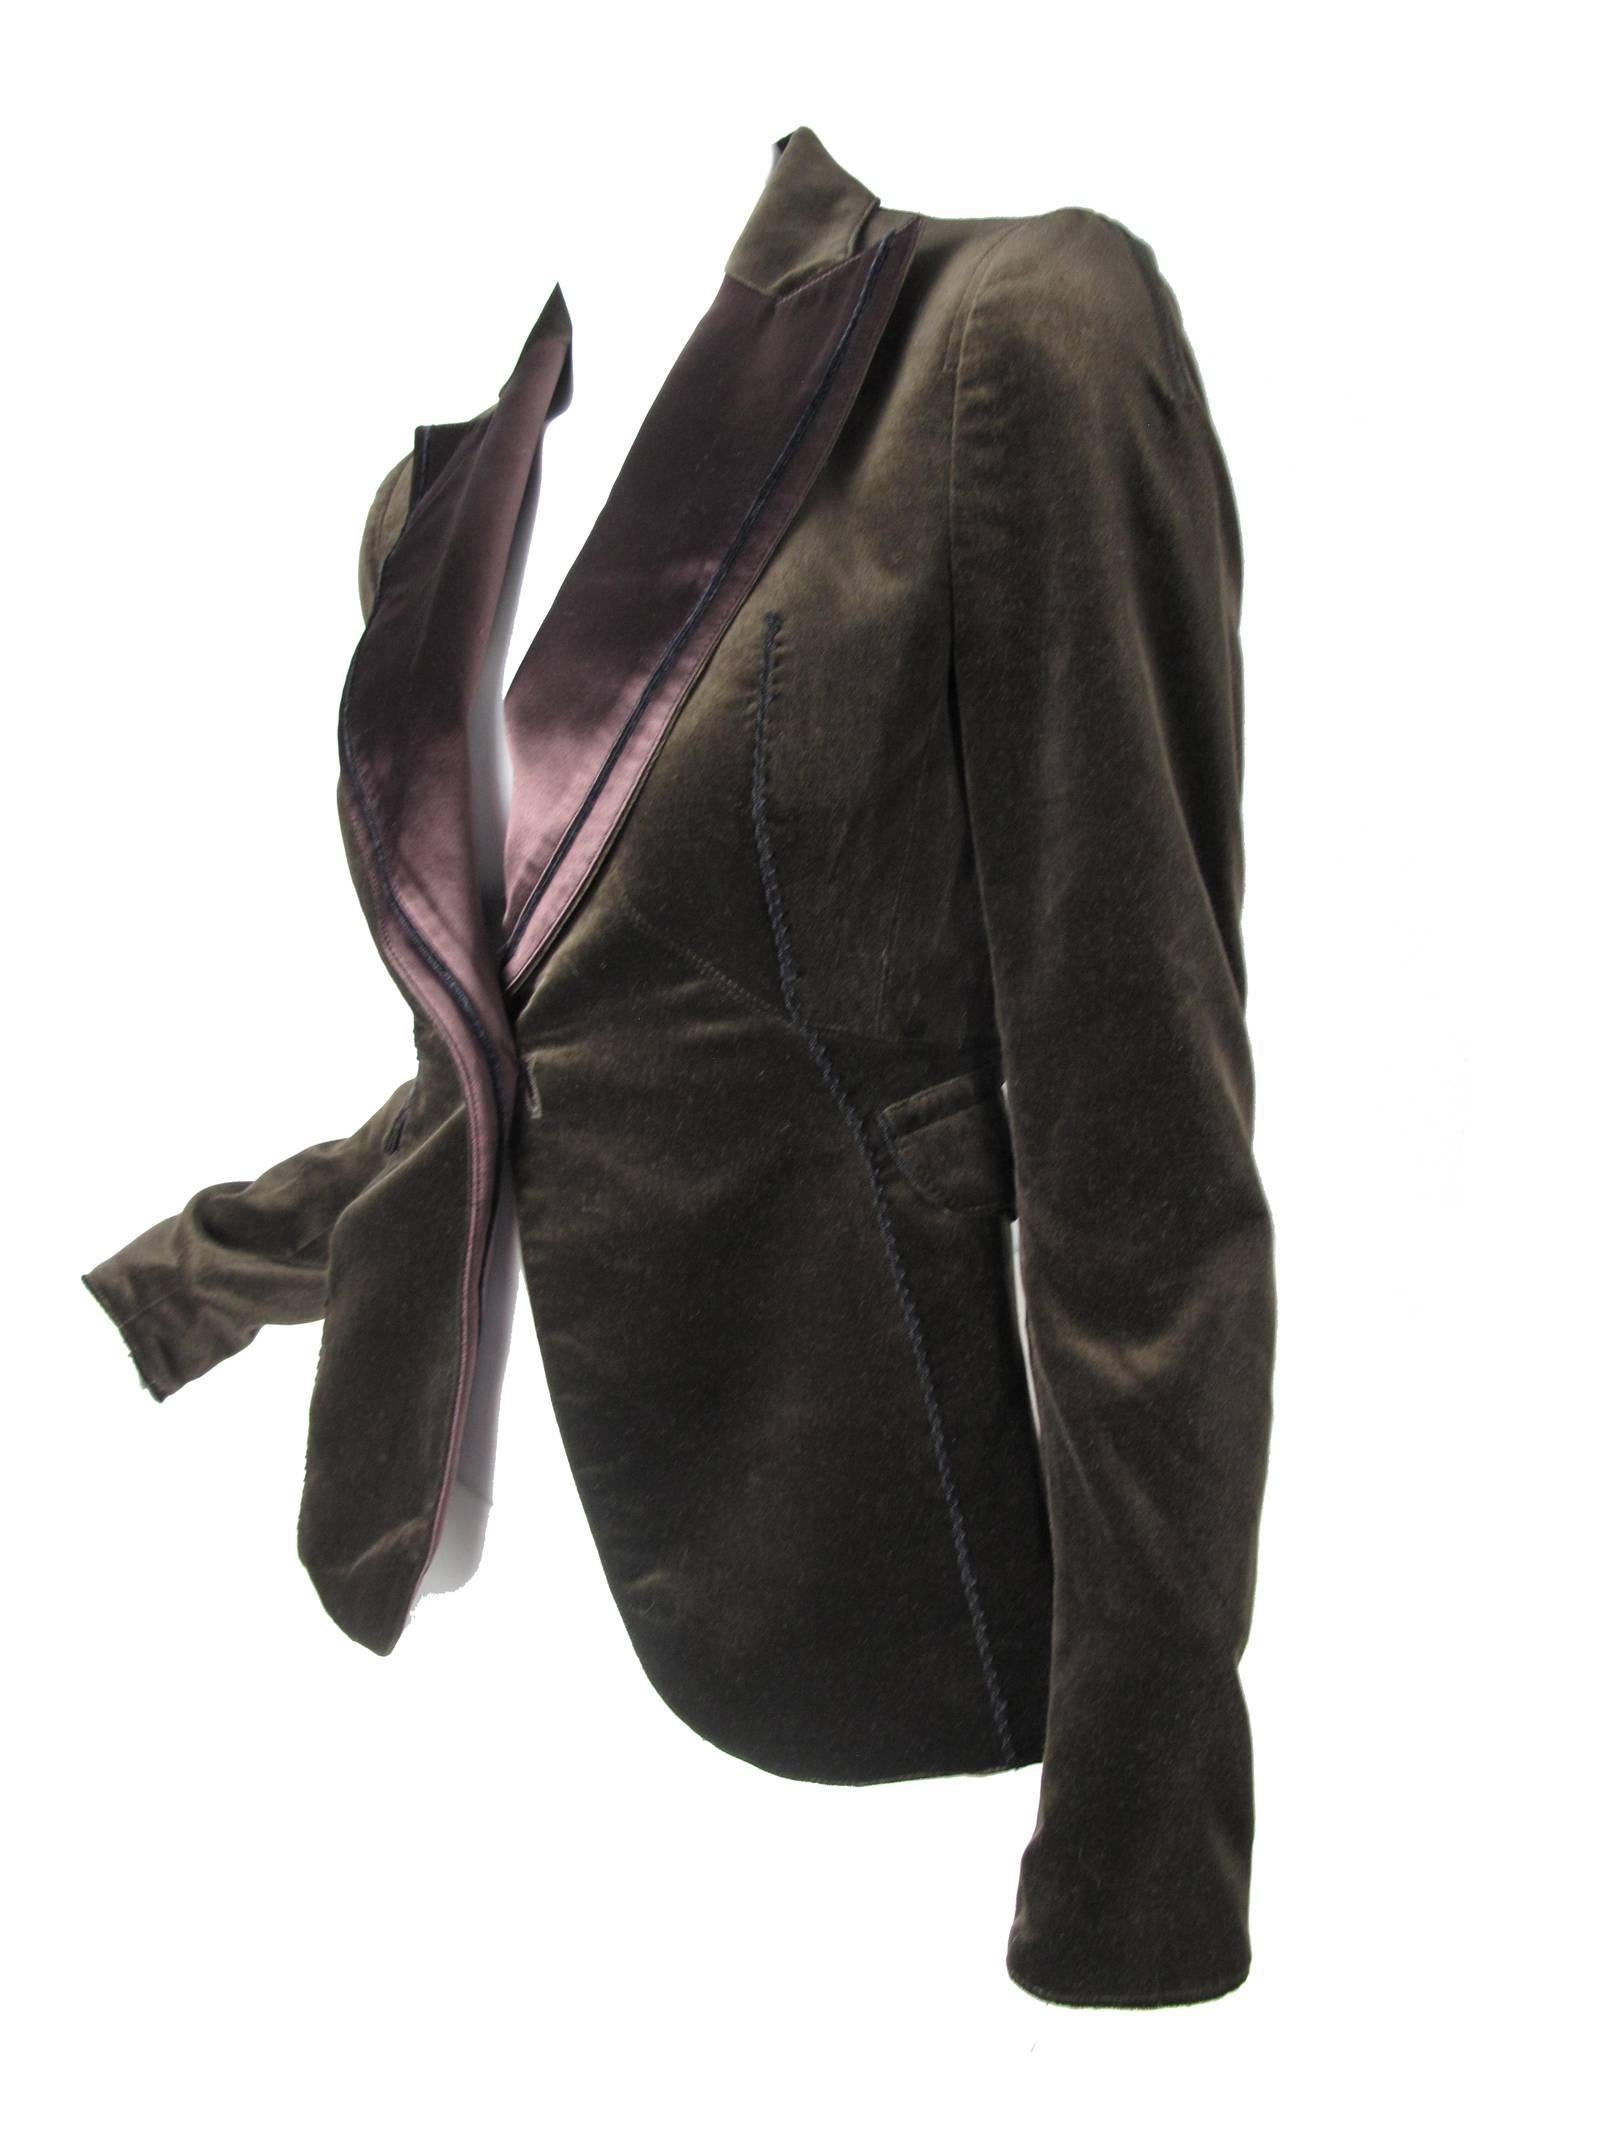 Costume National brown velvet and satin blazer. 
Size 40 / or current US 4 - 6
34